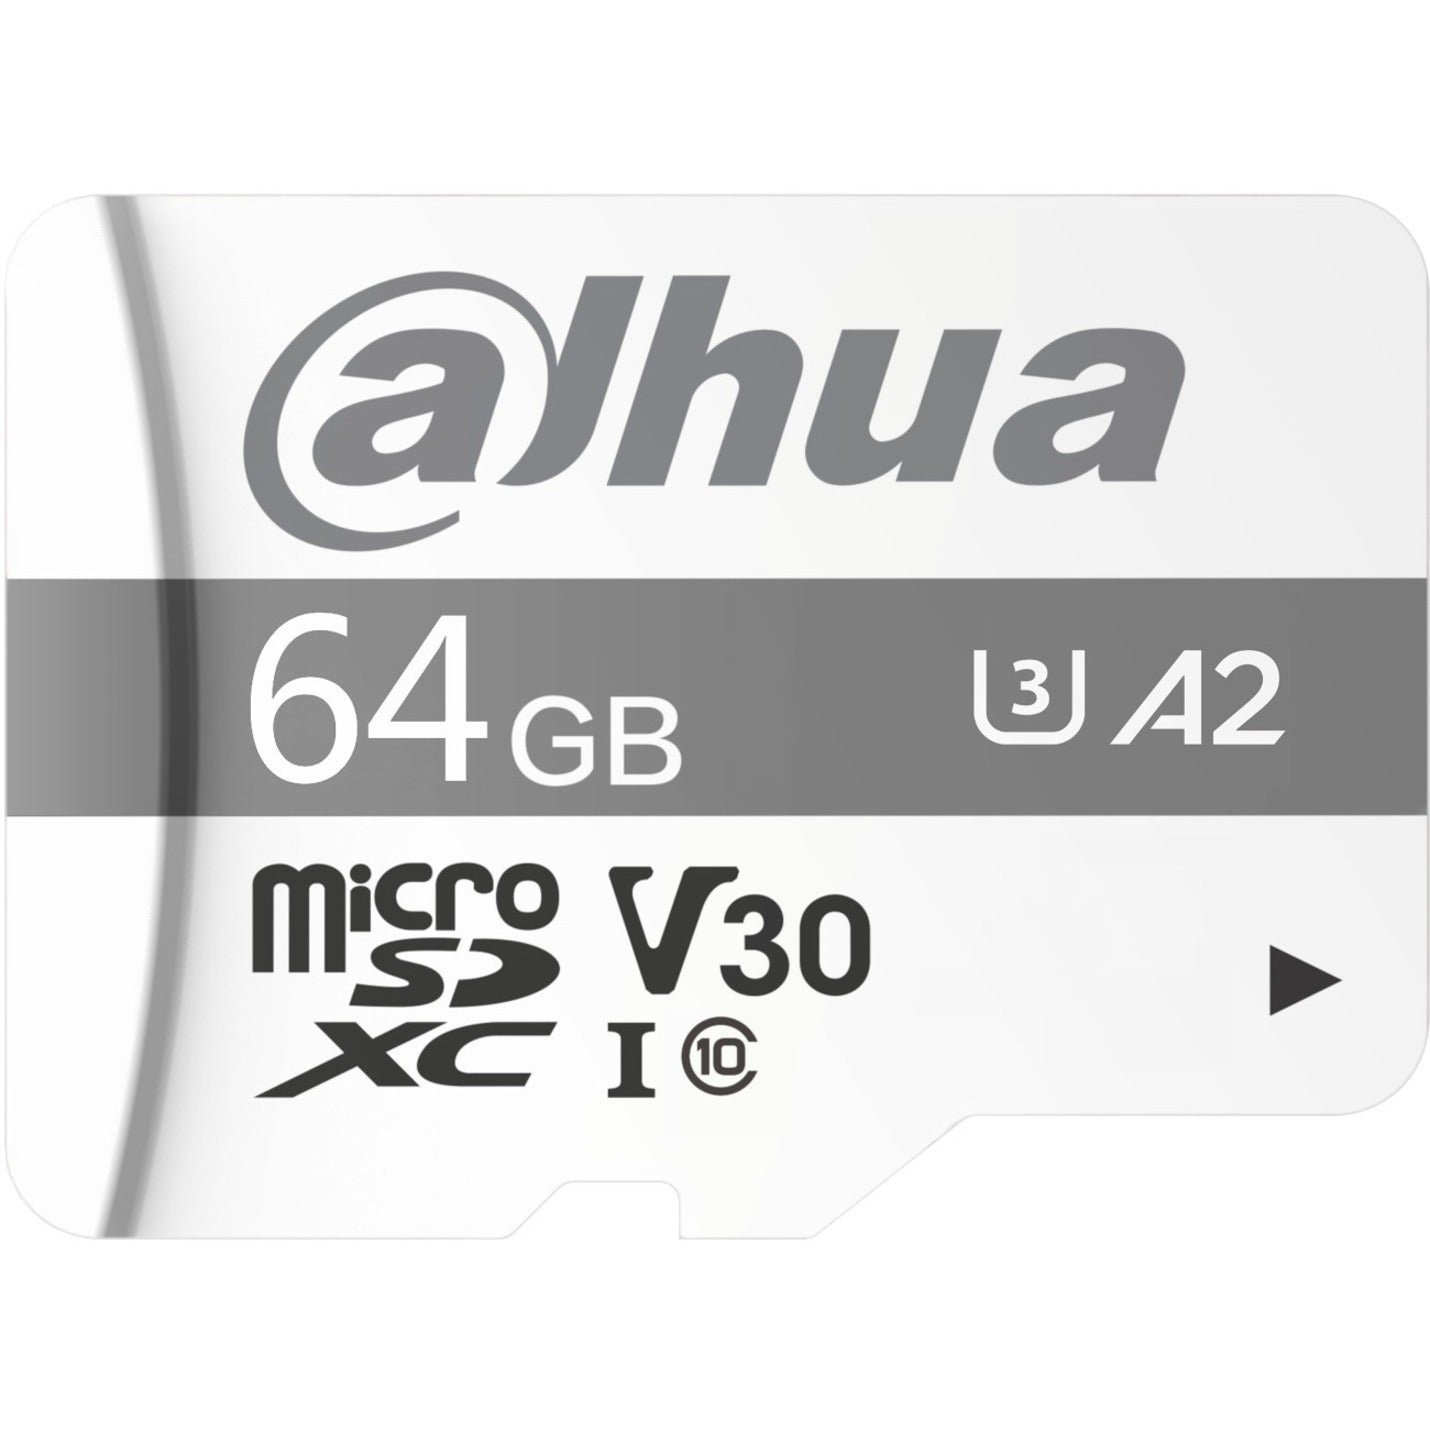 Dahua DHI-TF-P100/64GB P100 MicroSD Memory Card, 64GB High-Speed Transmission up to 100MB